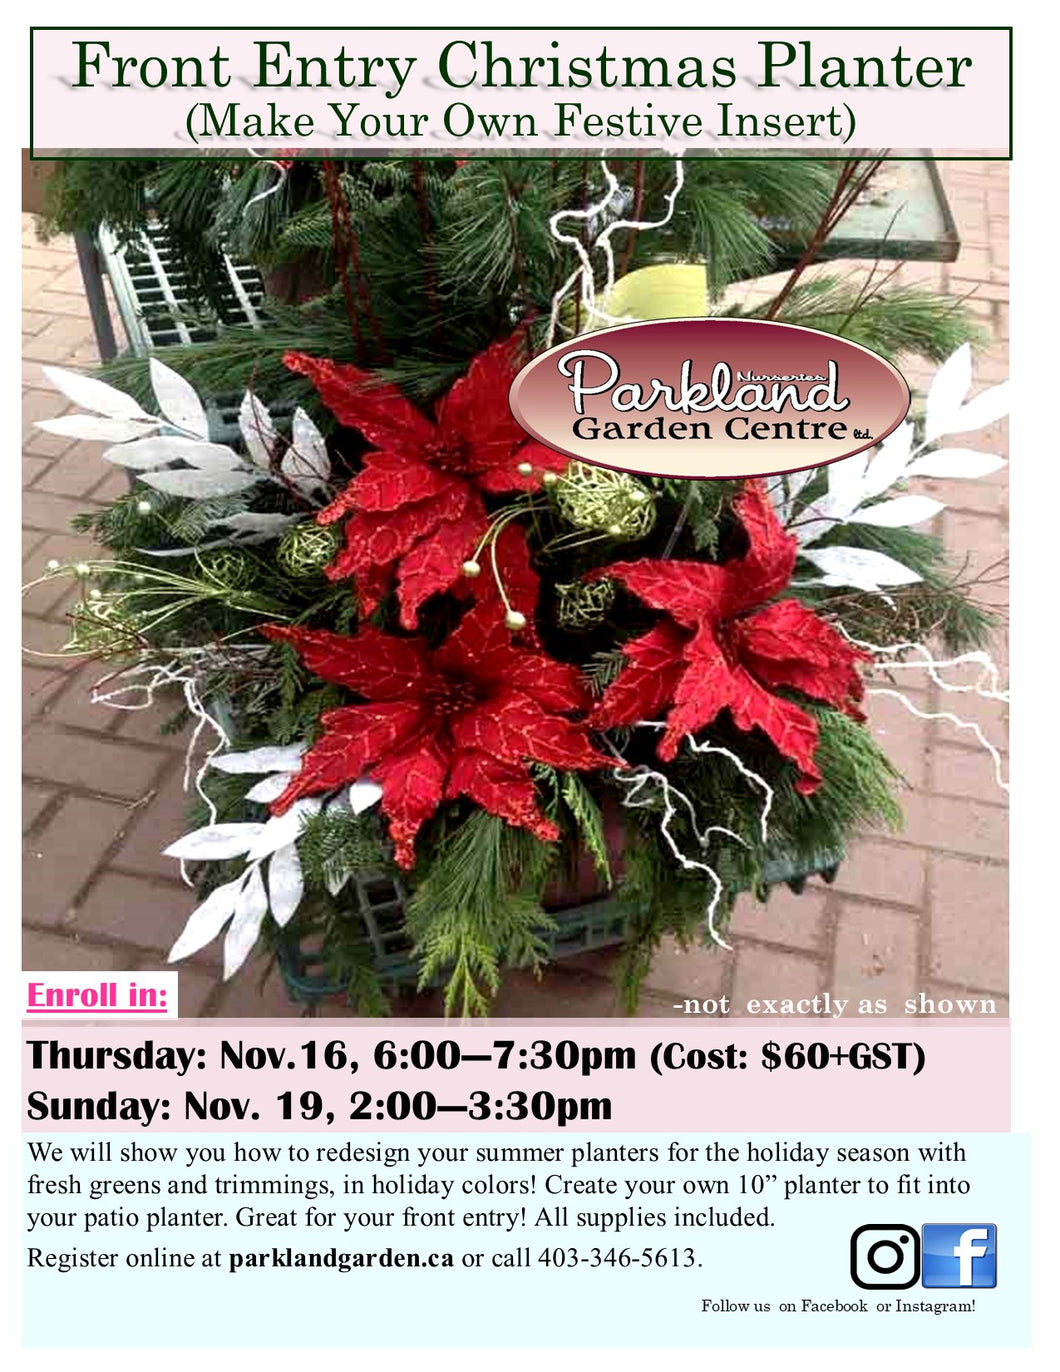 Front Entry Christmas Planter-Make Your Own Festive Insert  Thursday Nov 16/23 6:00 to 7:30pm